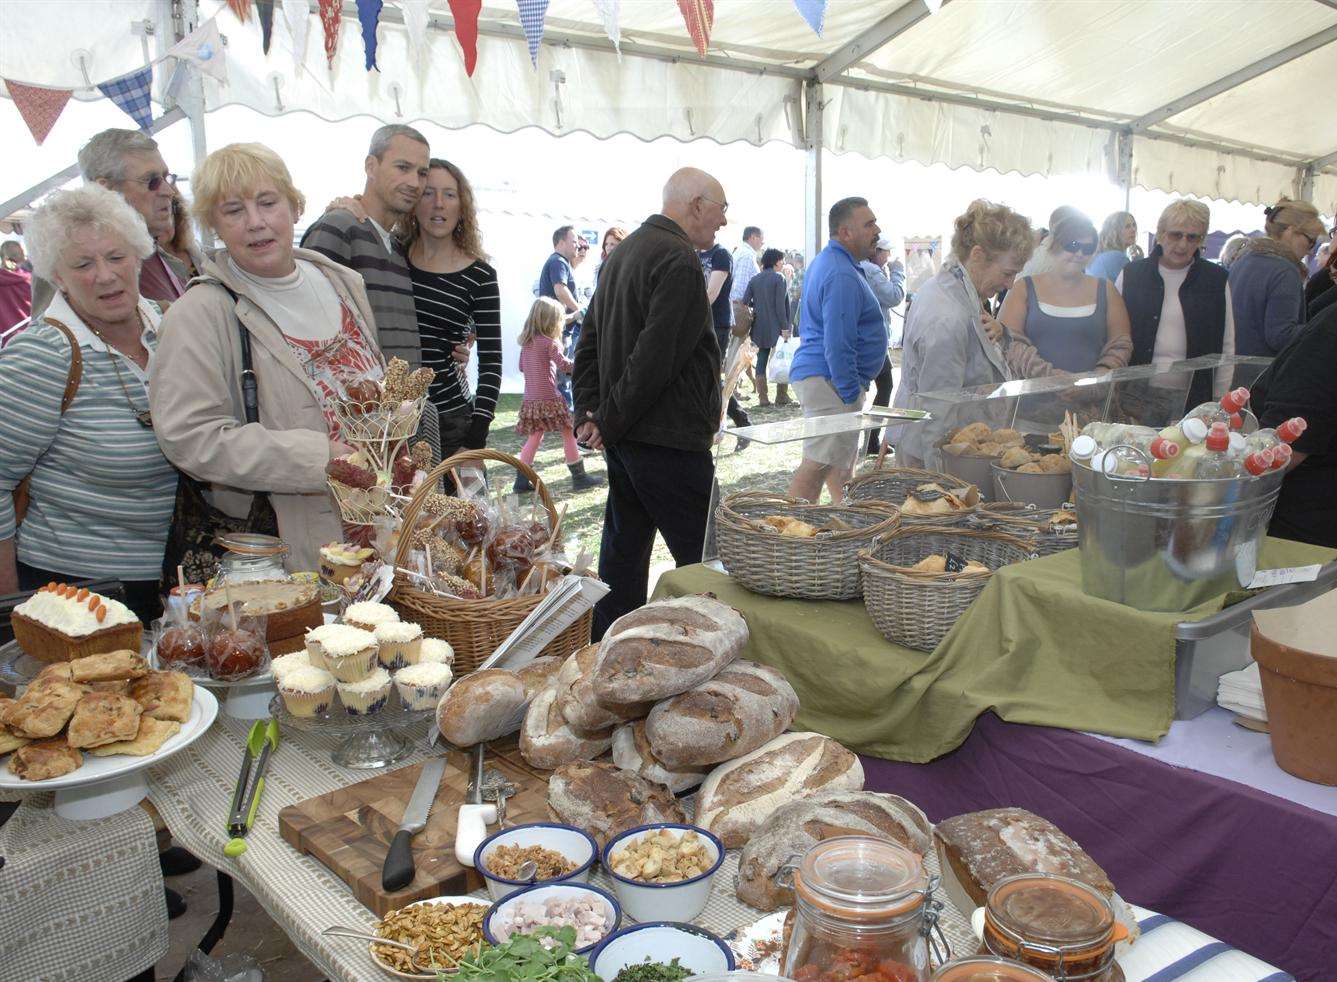 Broadstairs Food Festival